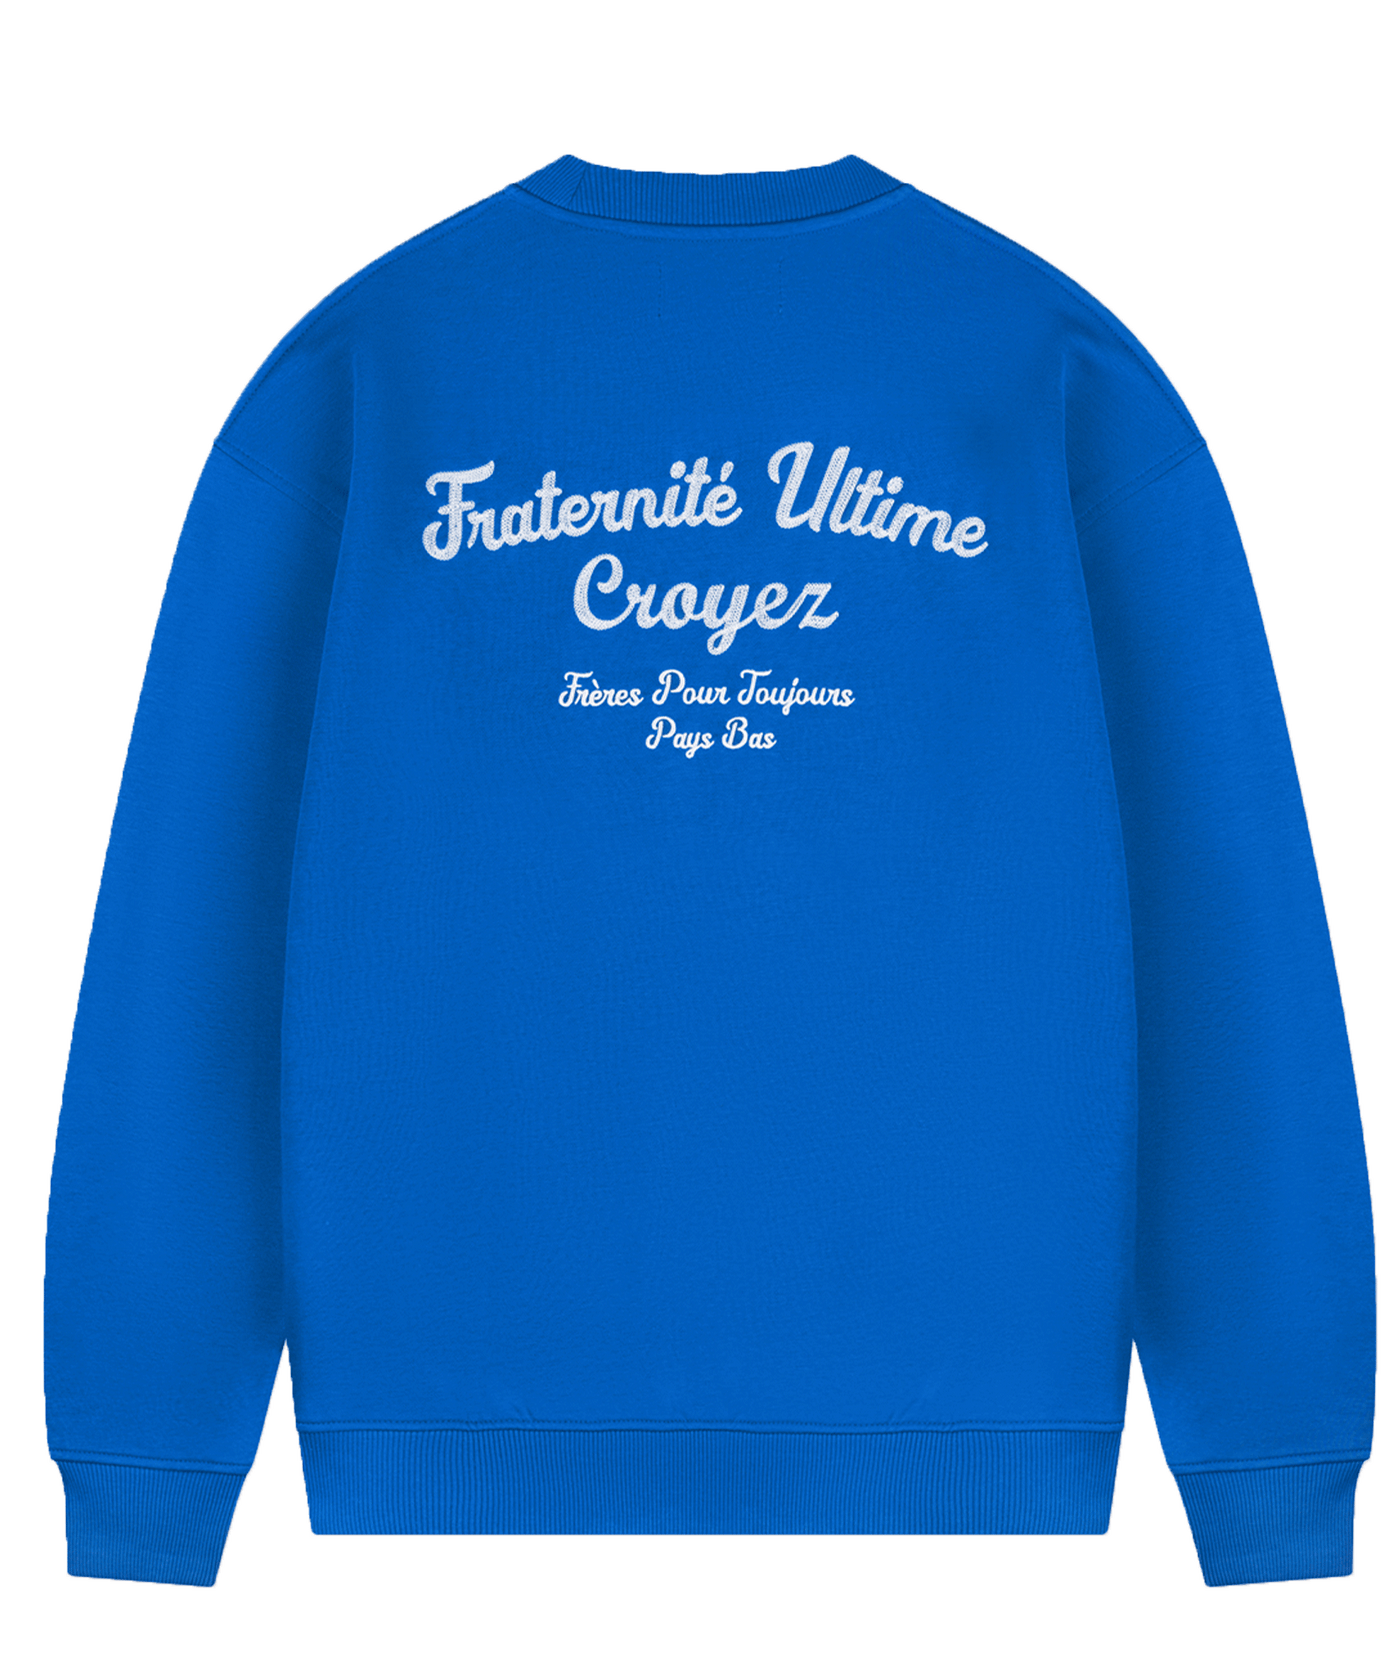 CROYEZ - Fraternite - Sweater - Cobalt Blue